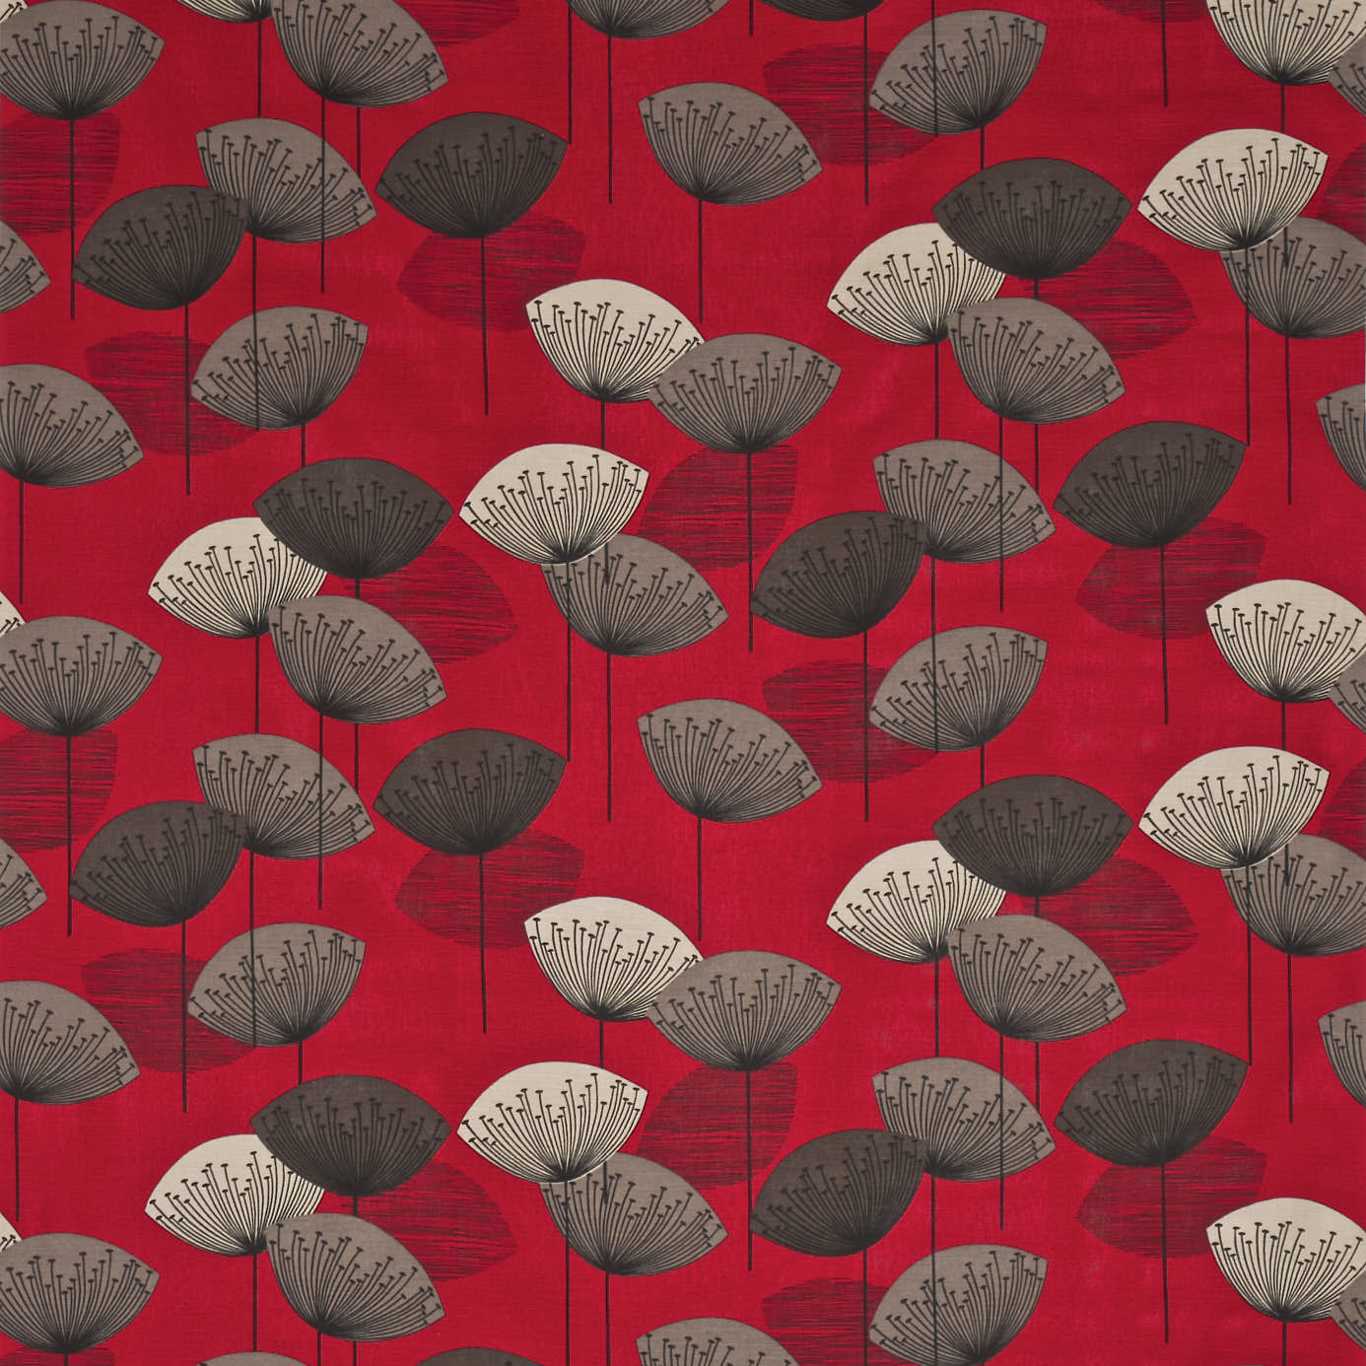 Dandelion Clocks Fabric by Sanderson - DOPNDA201 - Red